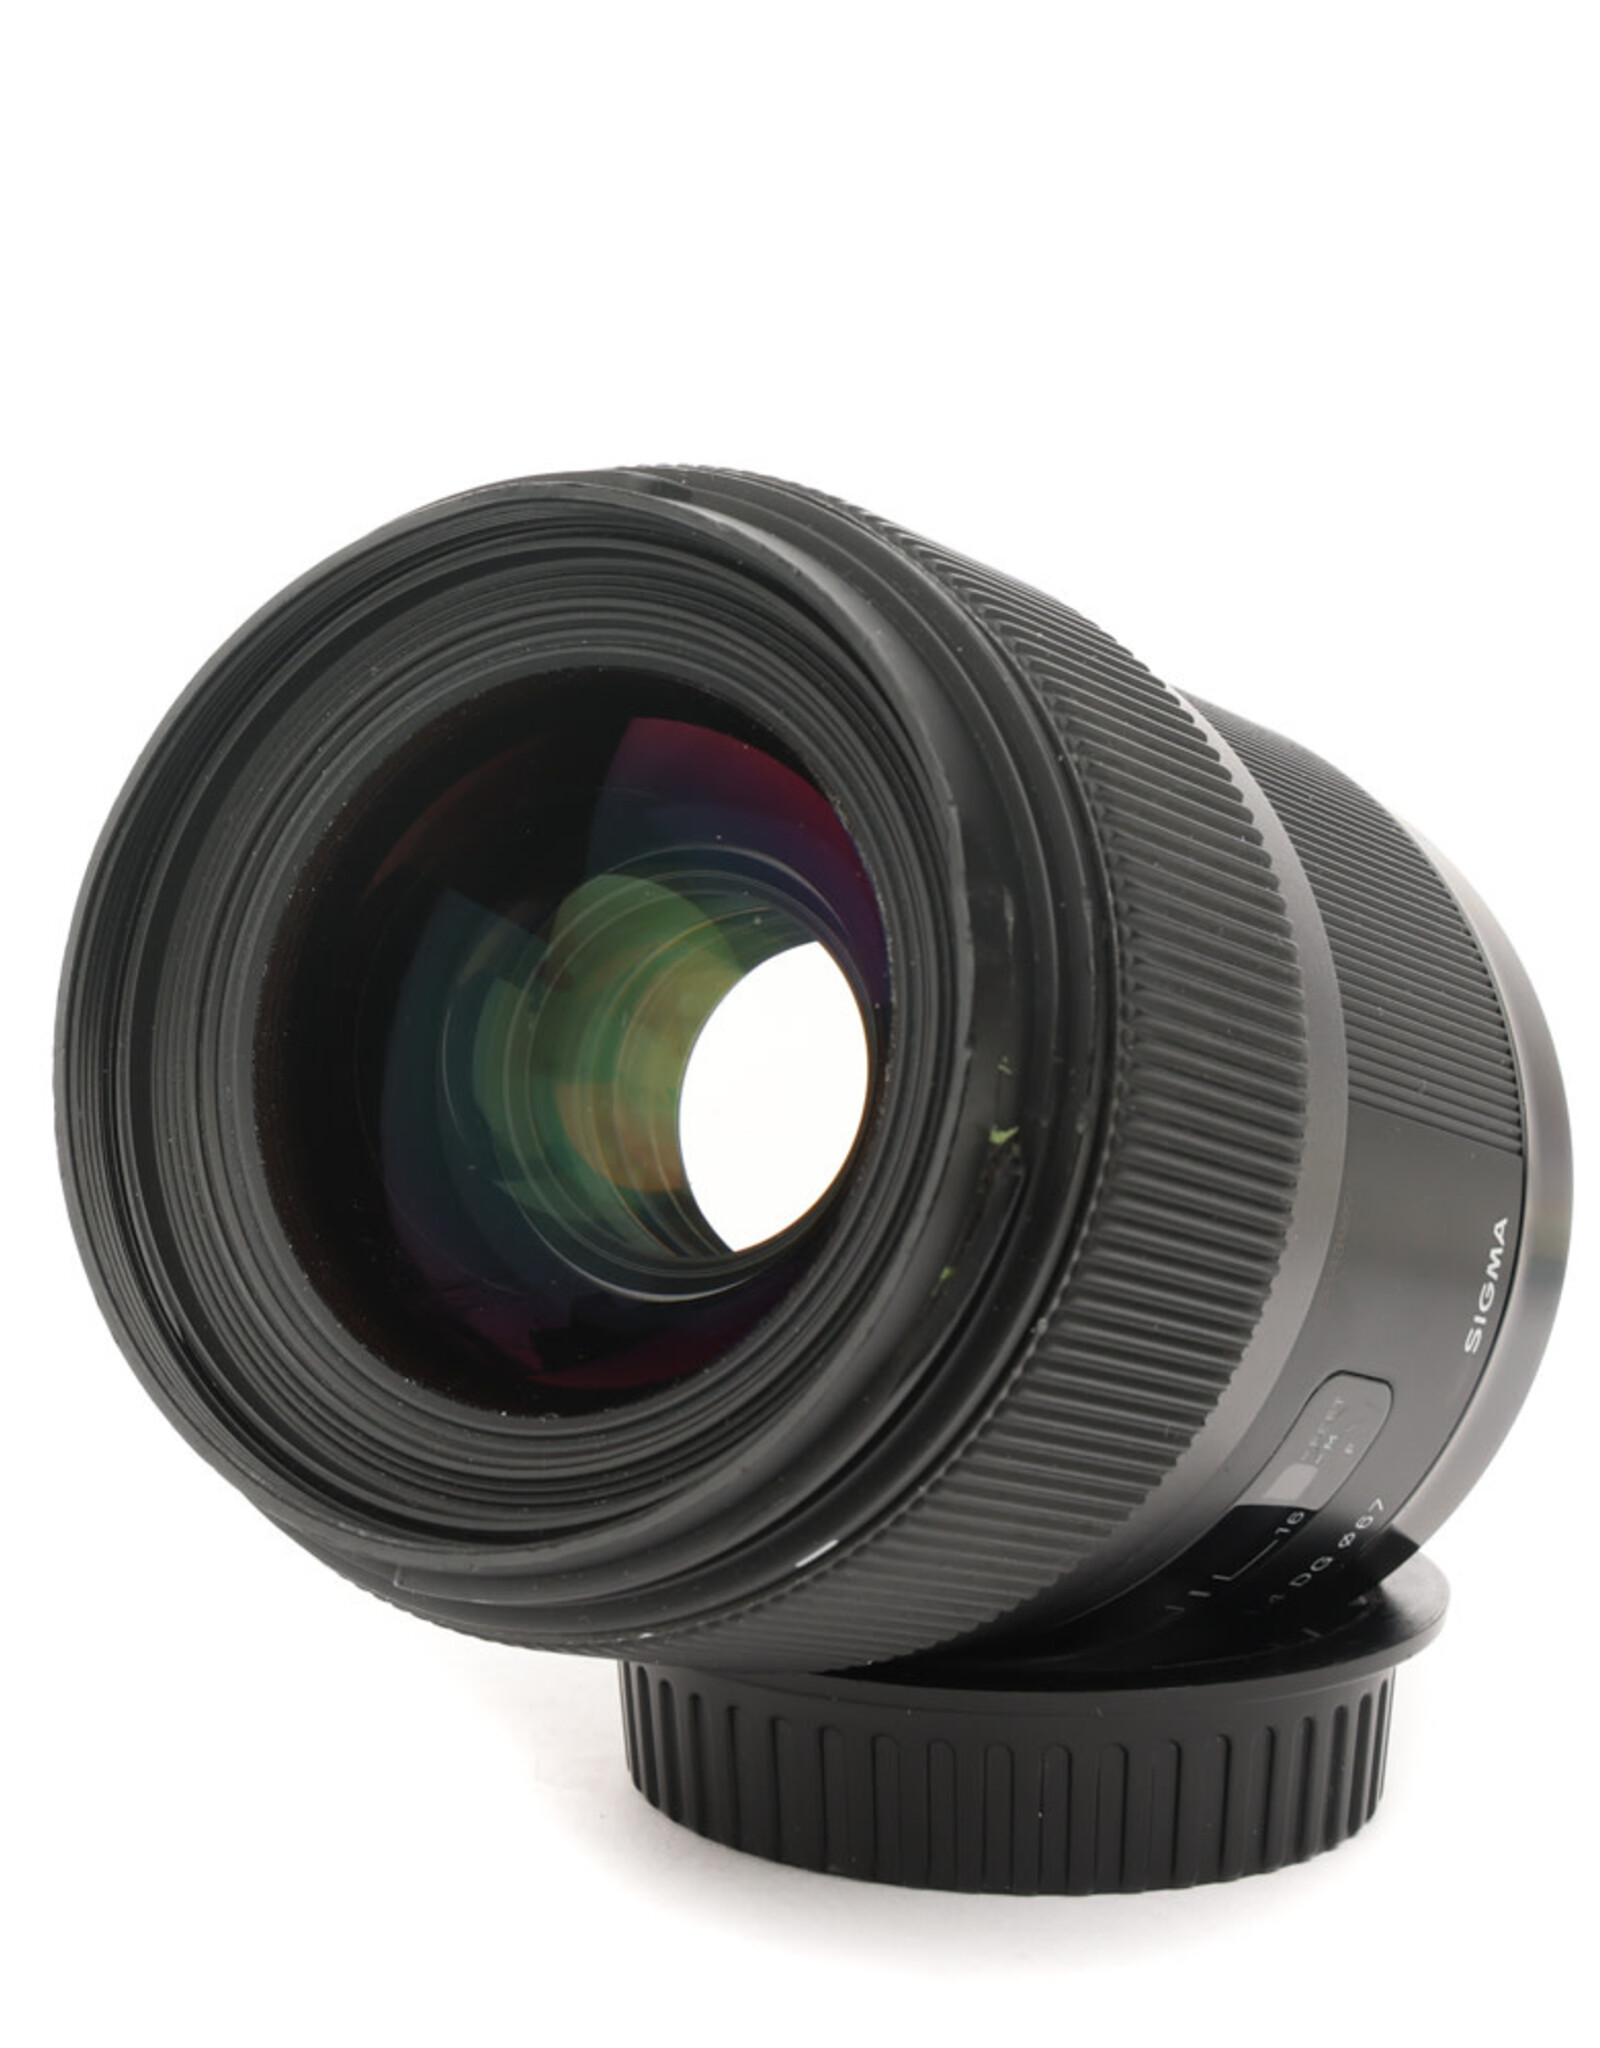 Sigma Sigma 35mm f1.4 DG Art Lens for Canon EF